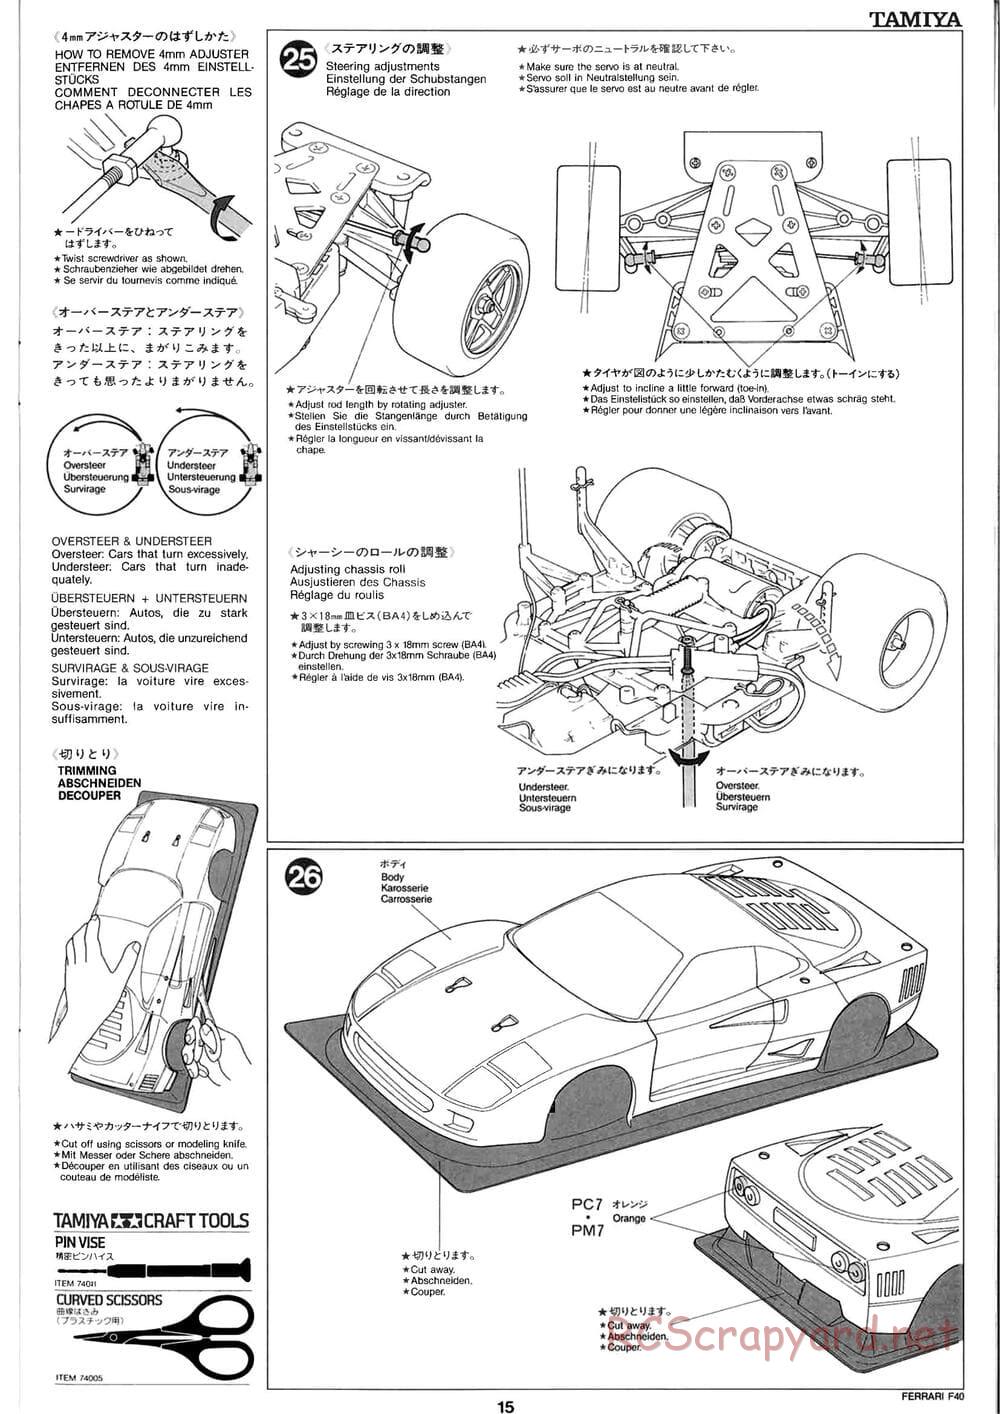 Tamiya - Ferrari F40 - Group-C Chassis - Manual - Page 15